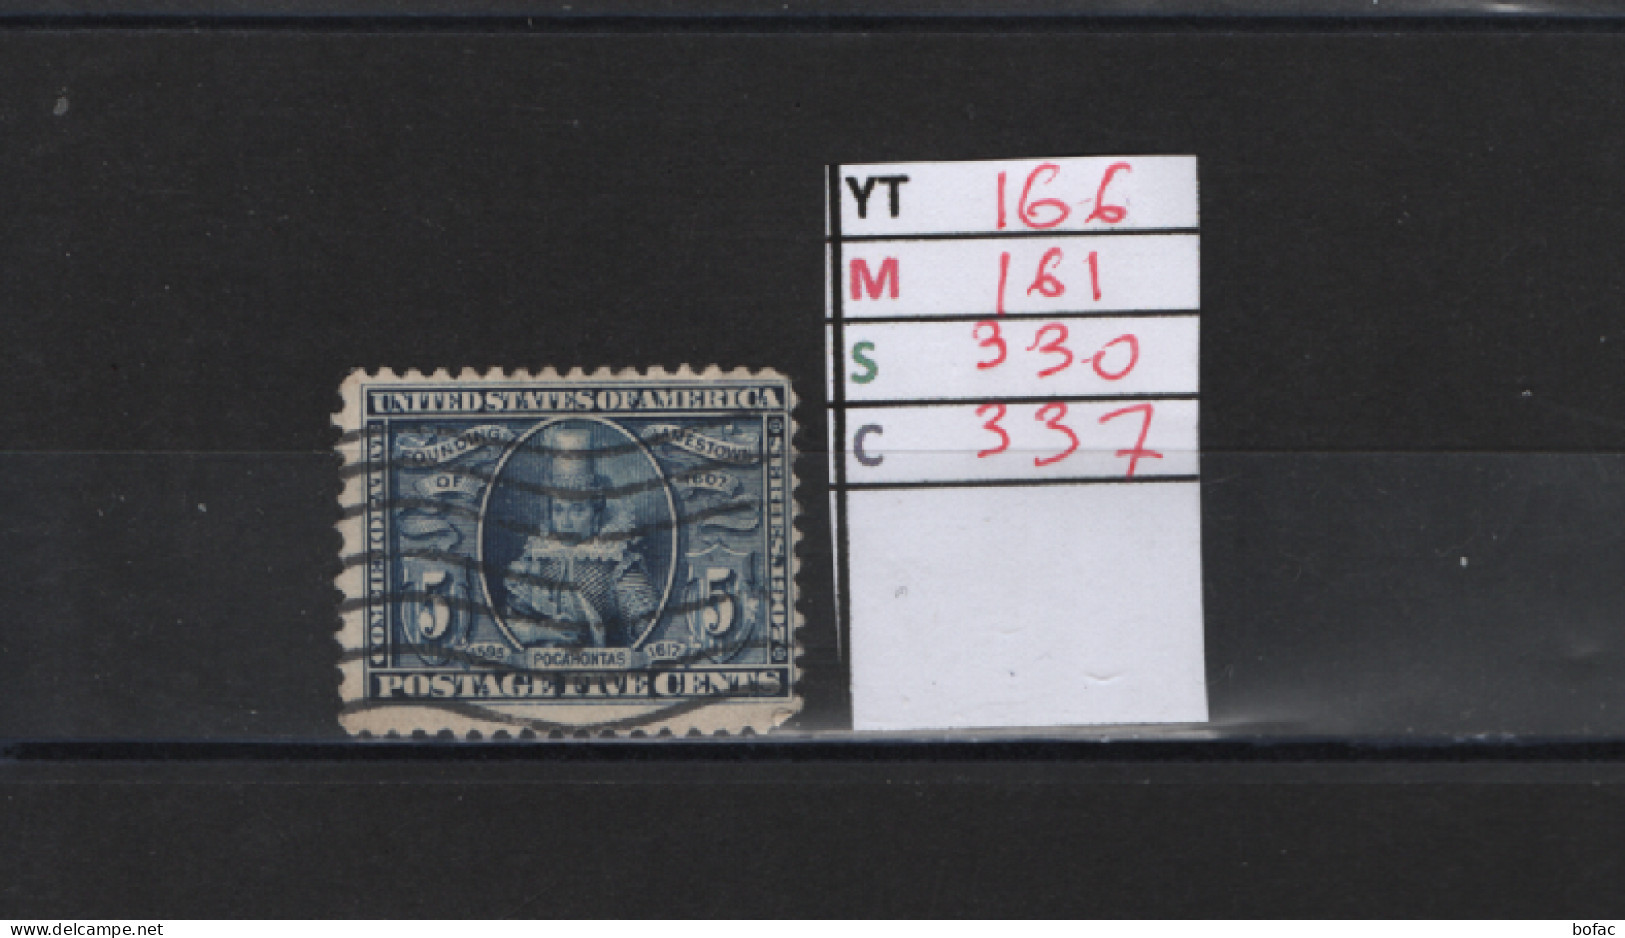 PRIX FIXE Obl 166 YT 161 MIC 330 SCOT 337 GIB L'indienne Pocahontas 1907 Etats Unis 58/05 - Used Stamps